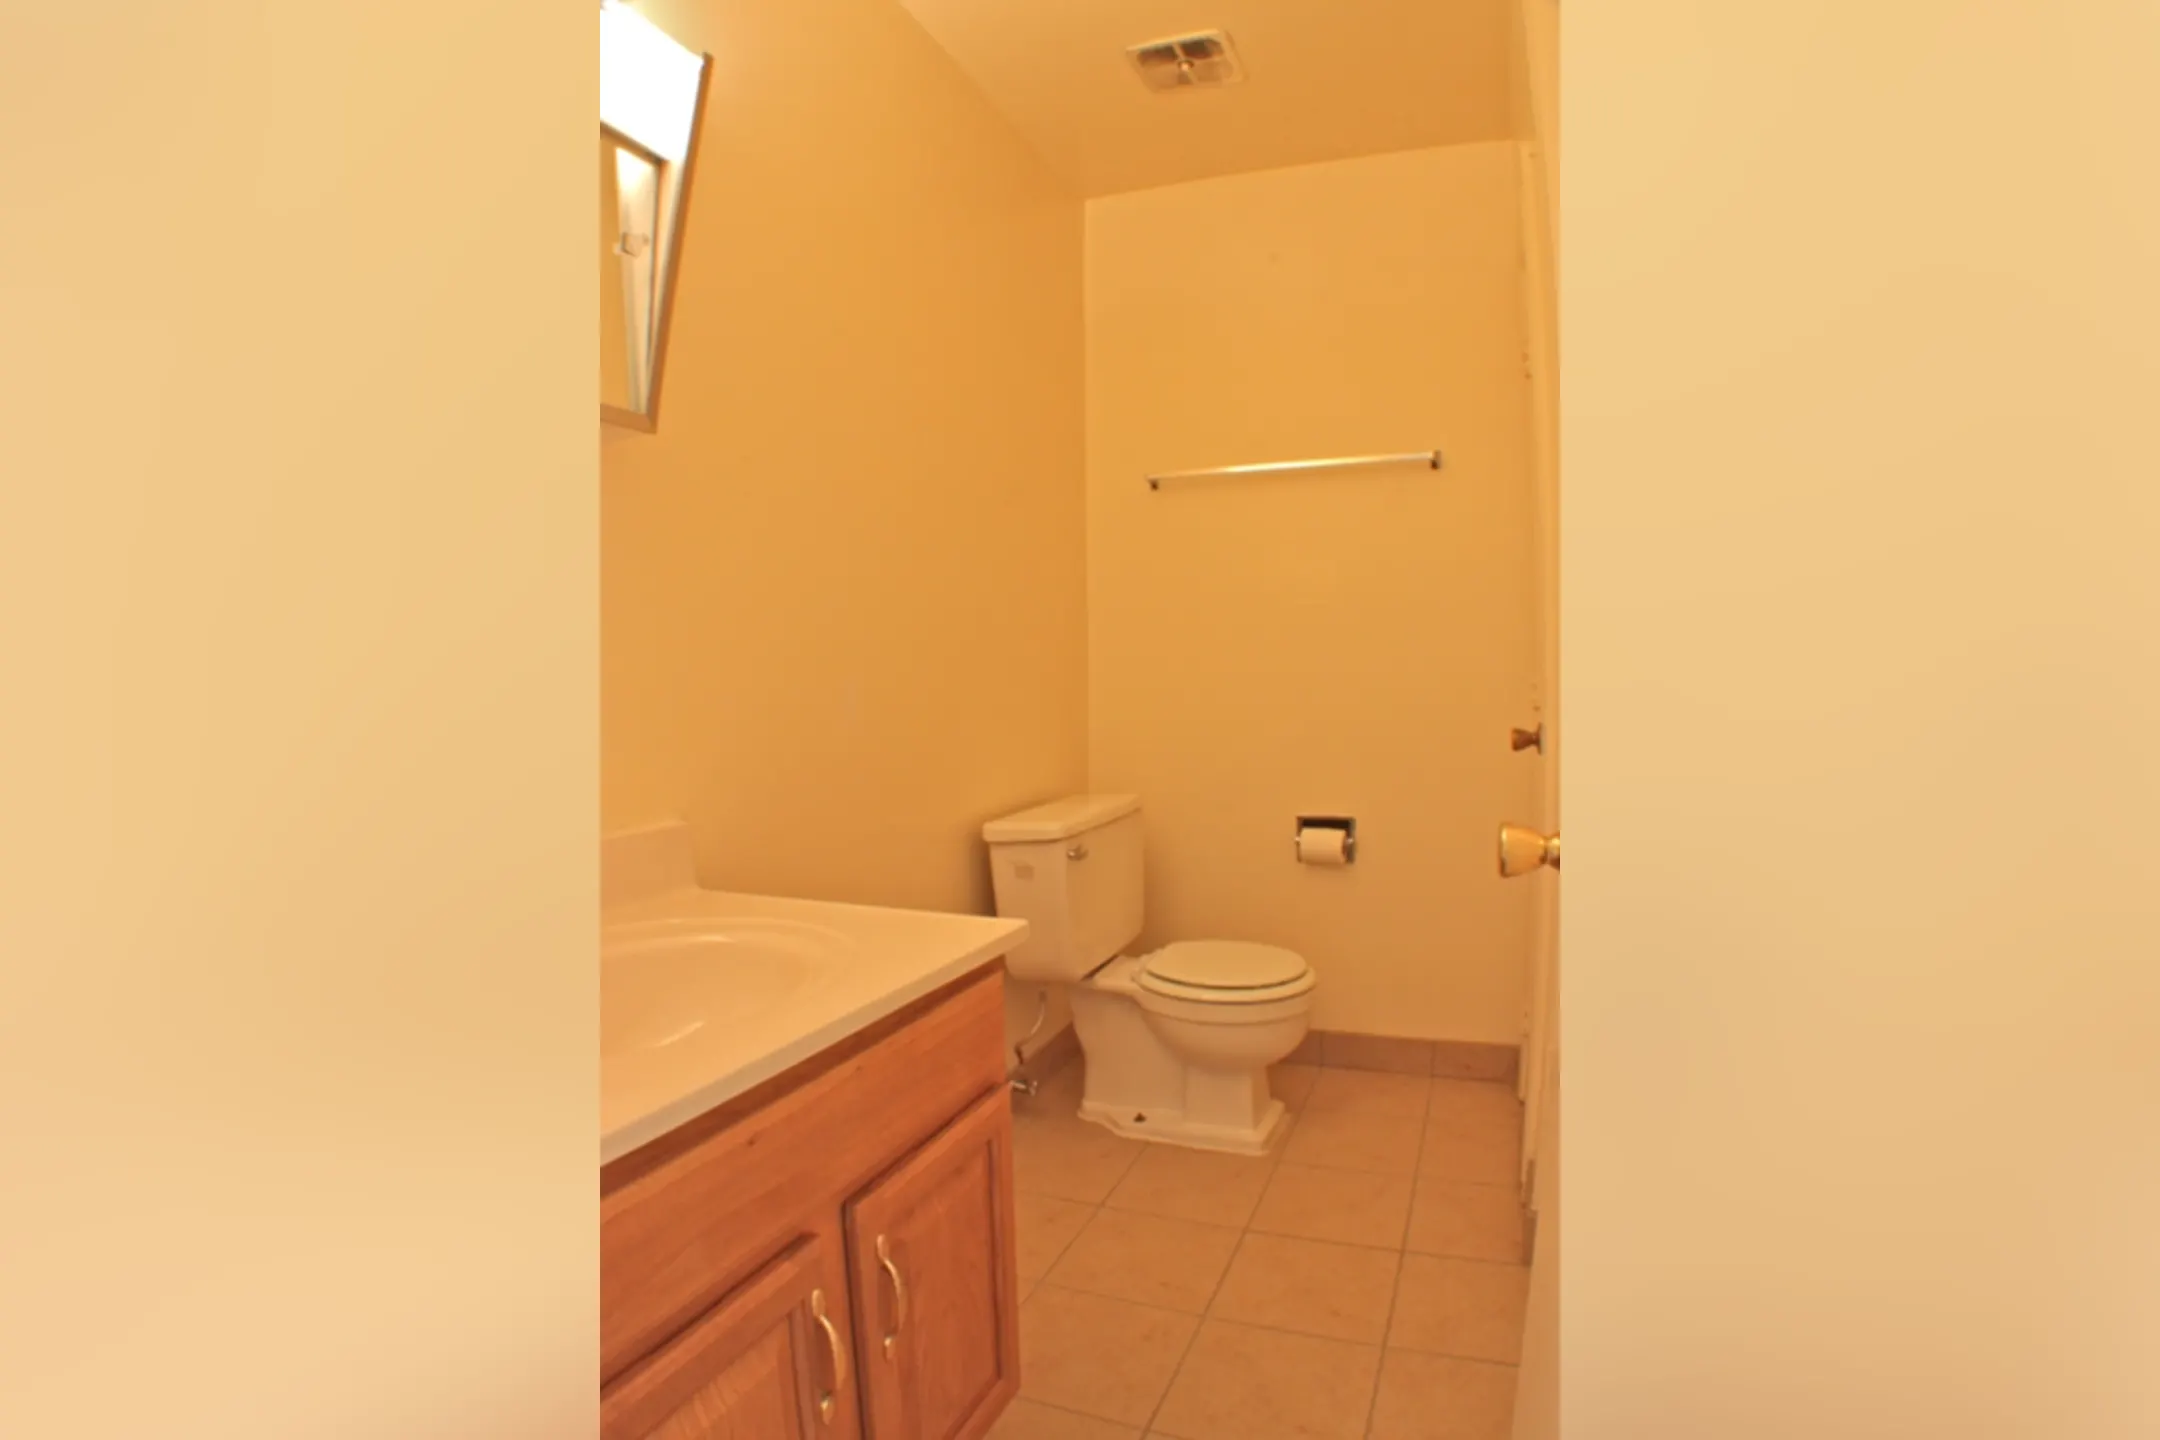 Bathroom - Param Apartments - Villa Park, IL